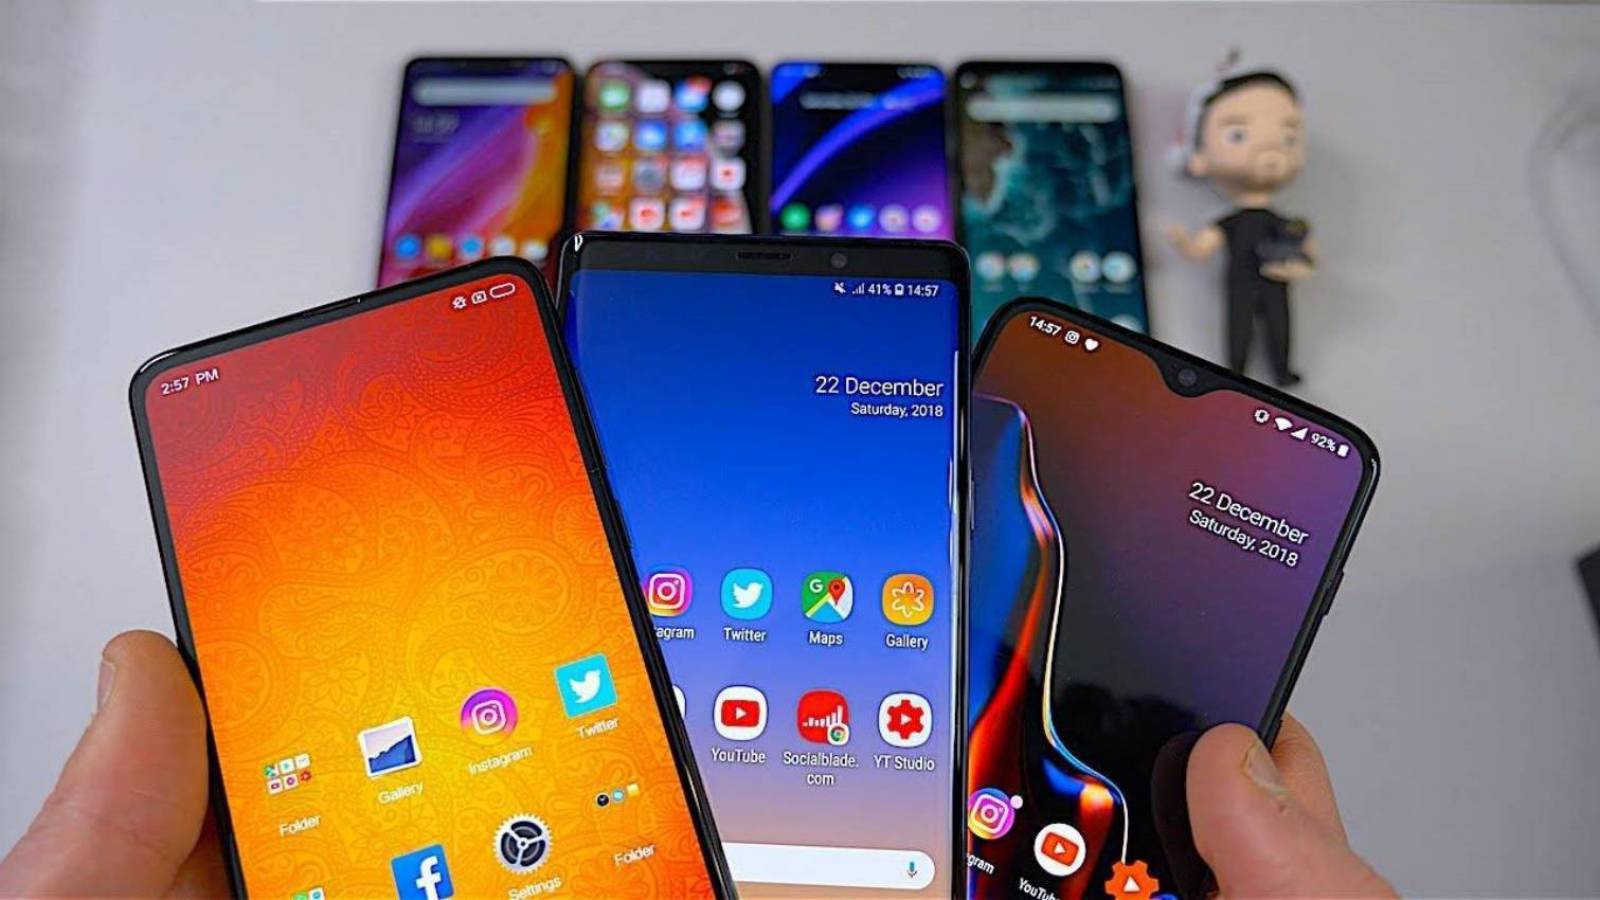 Teléfonos eMAG iPhone, Samsung, Huawei Descuento de MIL LEI